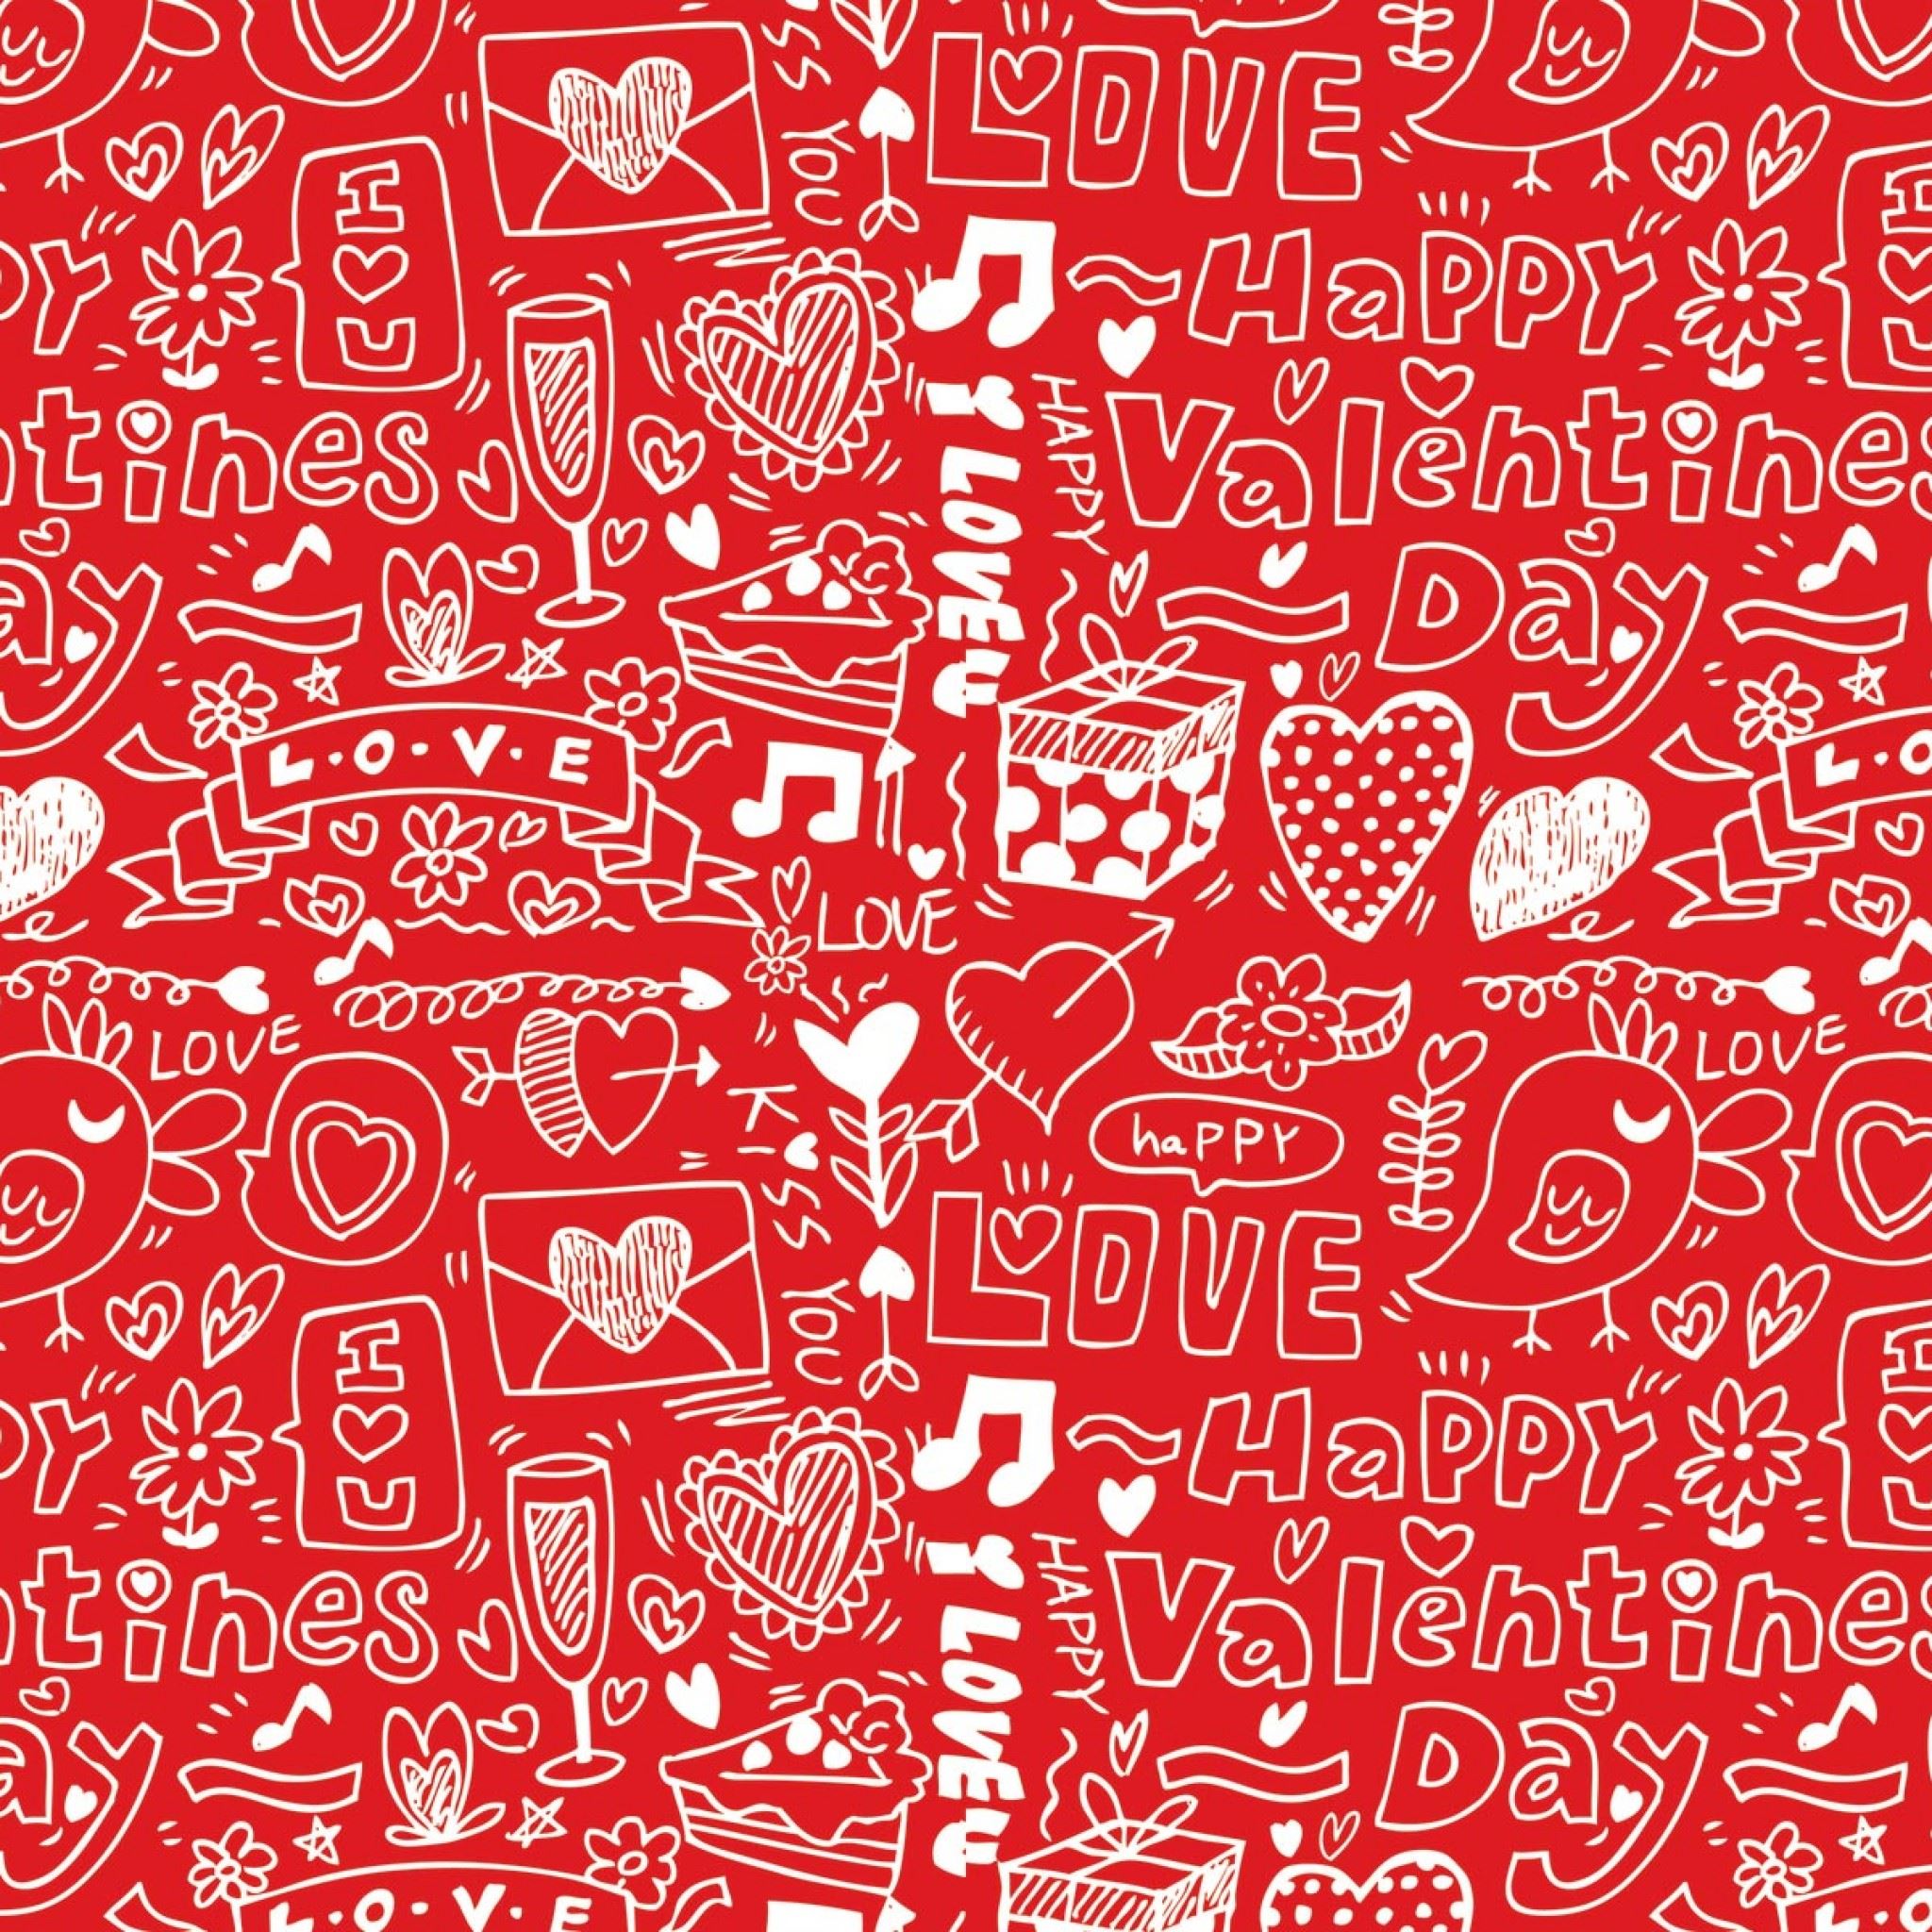 Happy Valentines iPad Air wallpaper 